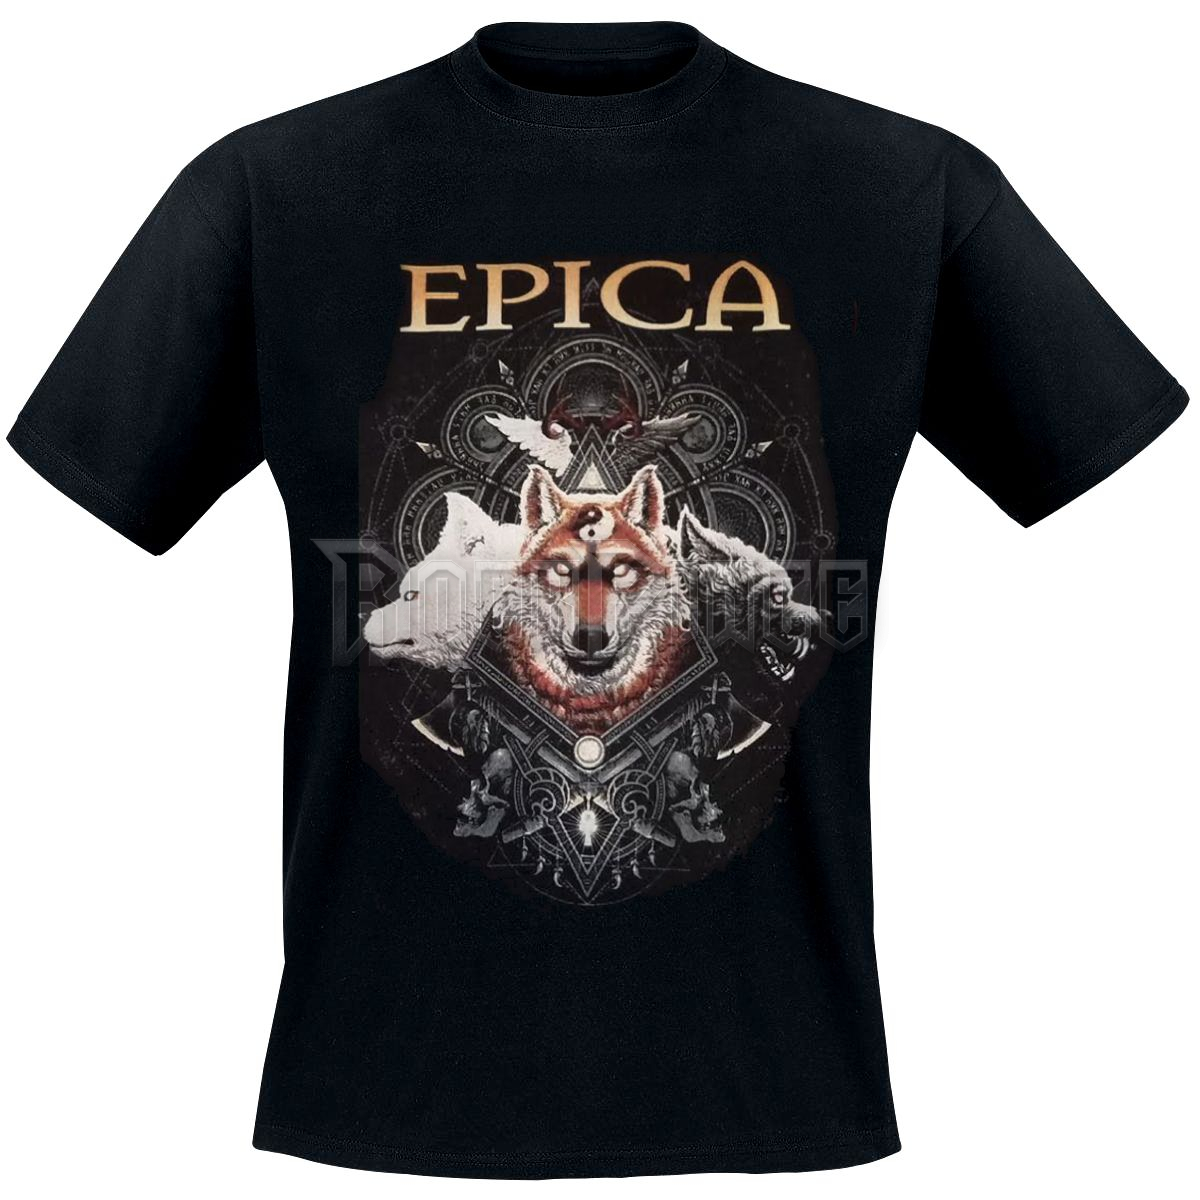 Epica - The Wolves Within - UNISEX PÓLÓ